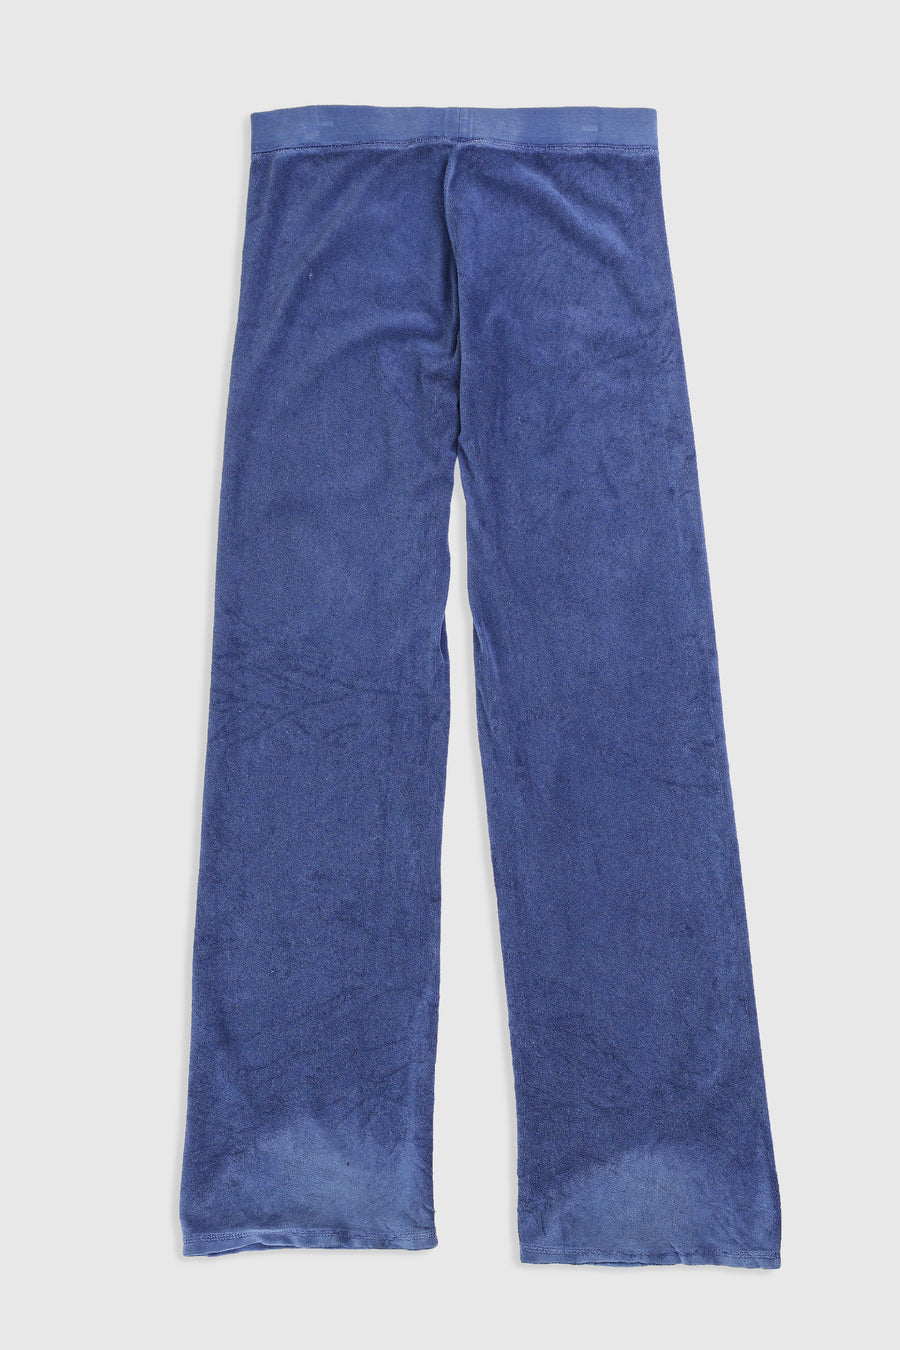 Vintage Juicy Couture Terrycloth Pants - M